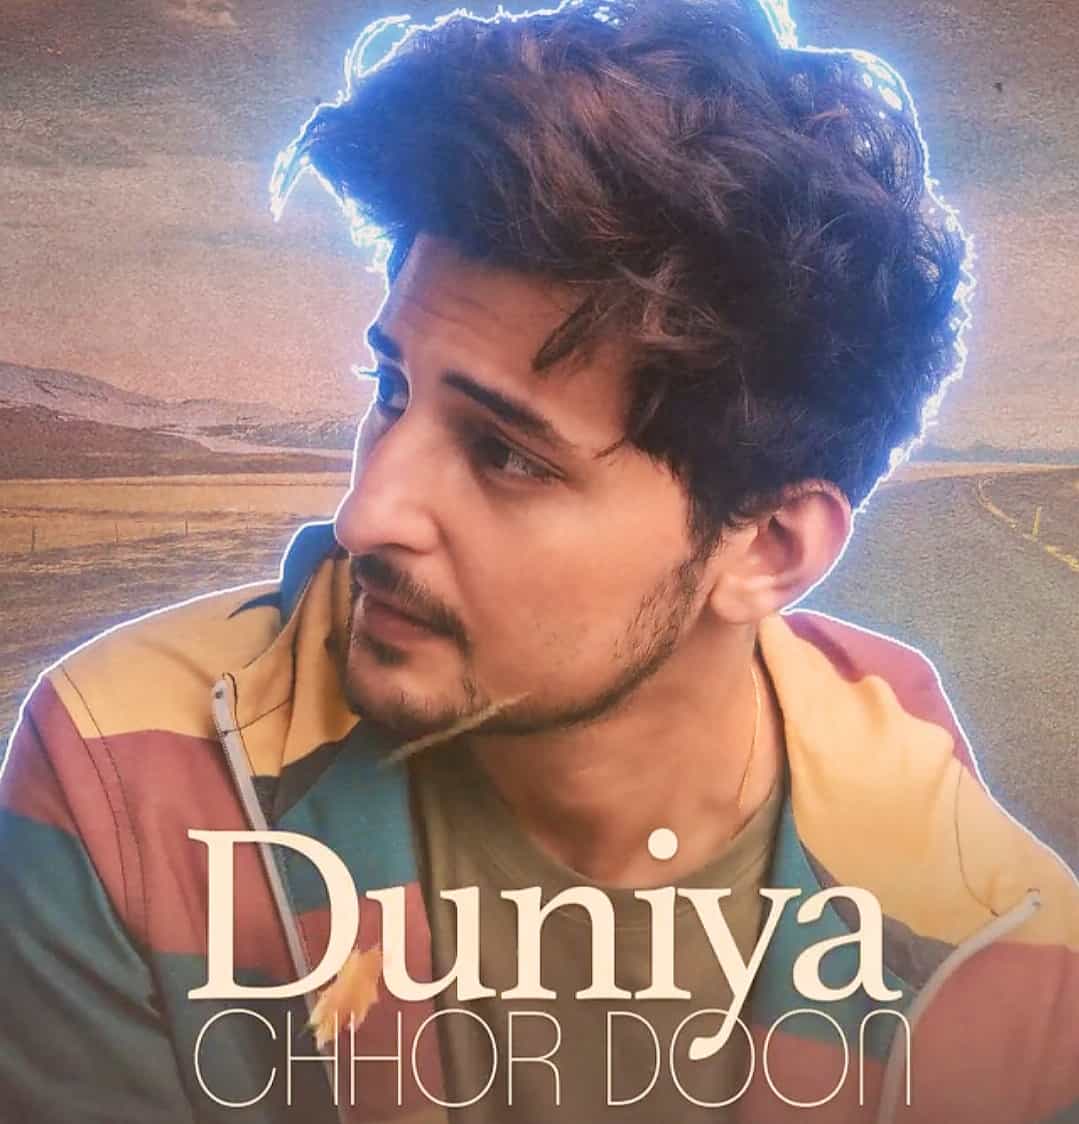 Duniya Chhor Doon song image features Darshan Raval